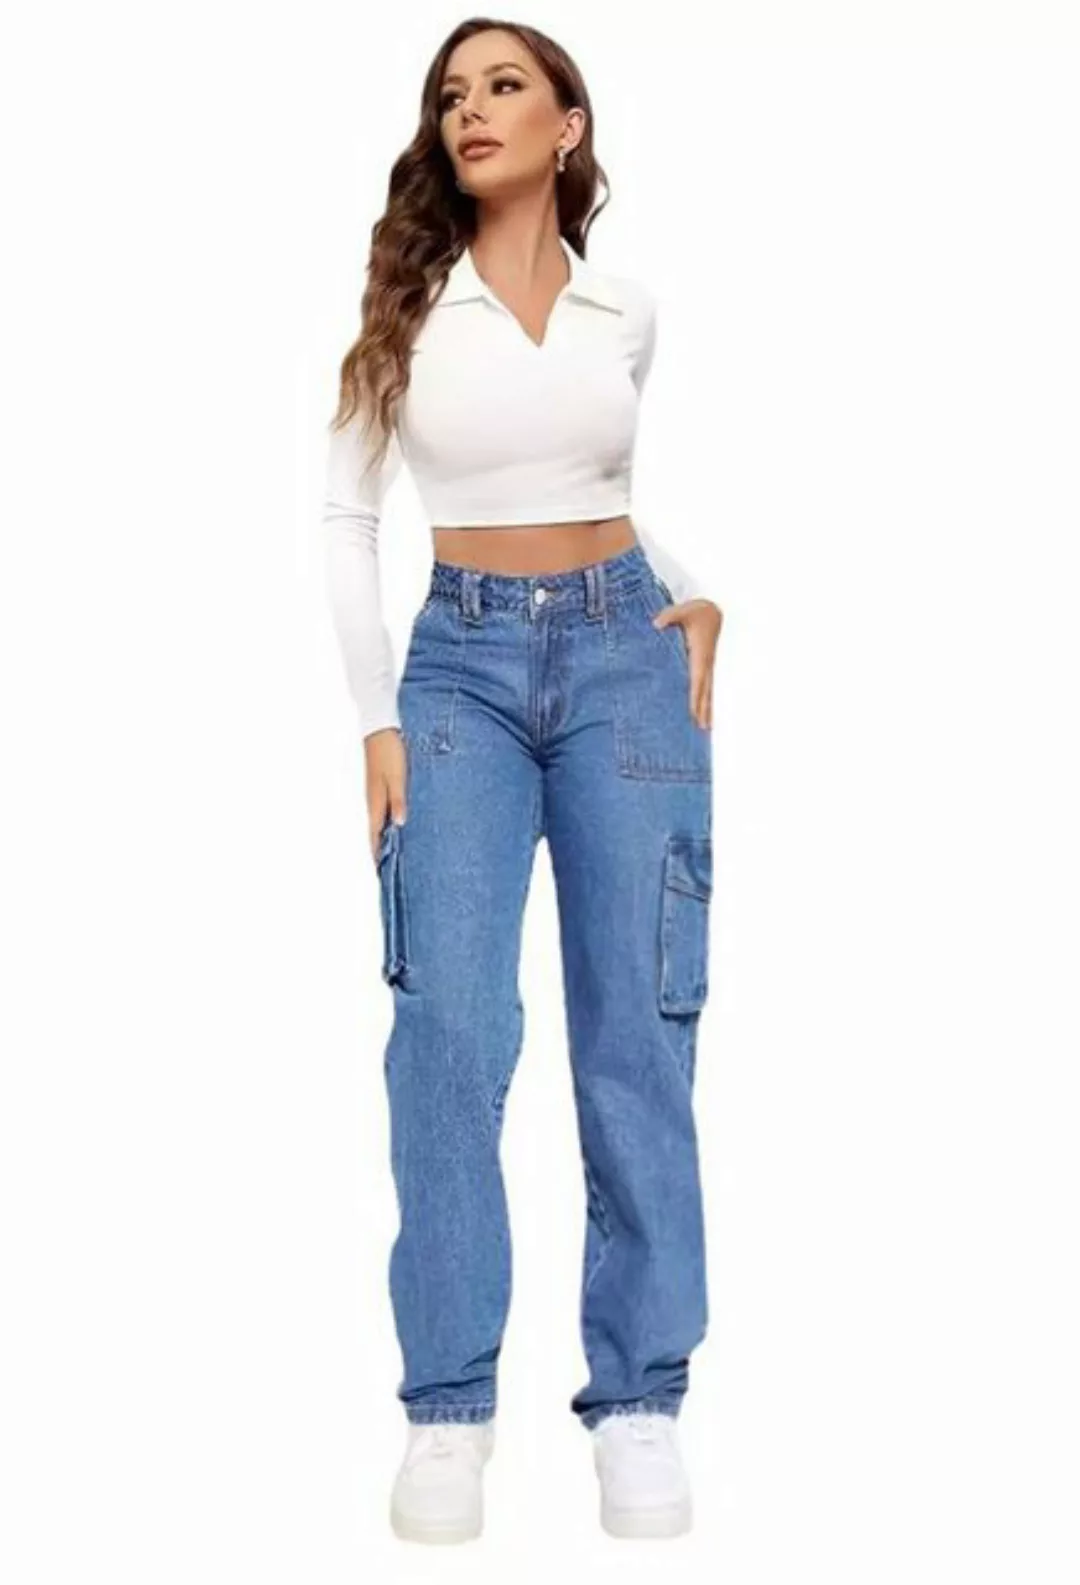 CHENIN Bequeme Jeans Retro mid-rise multi-pocket cargo jeans damen casual s günstig online kaufen